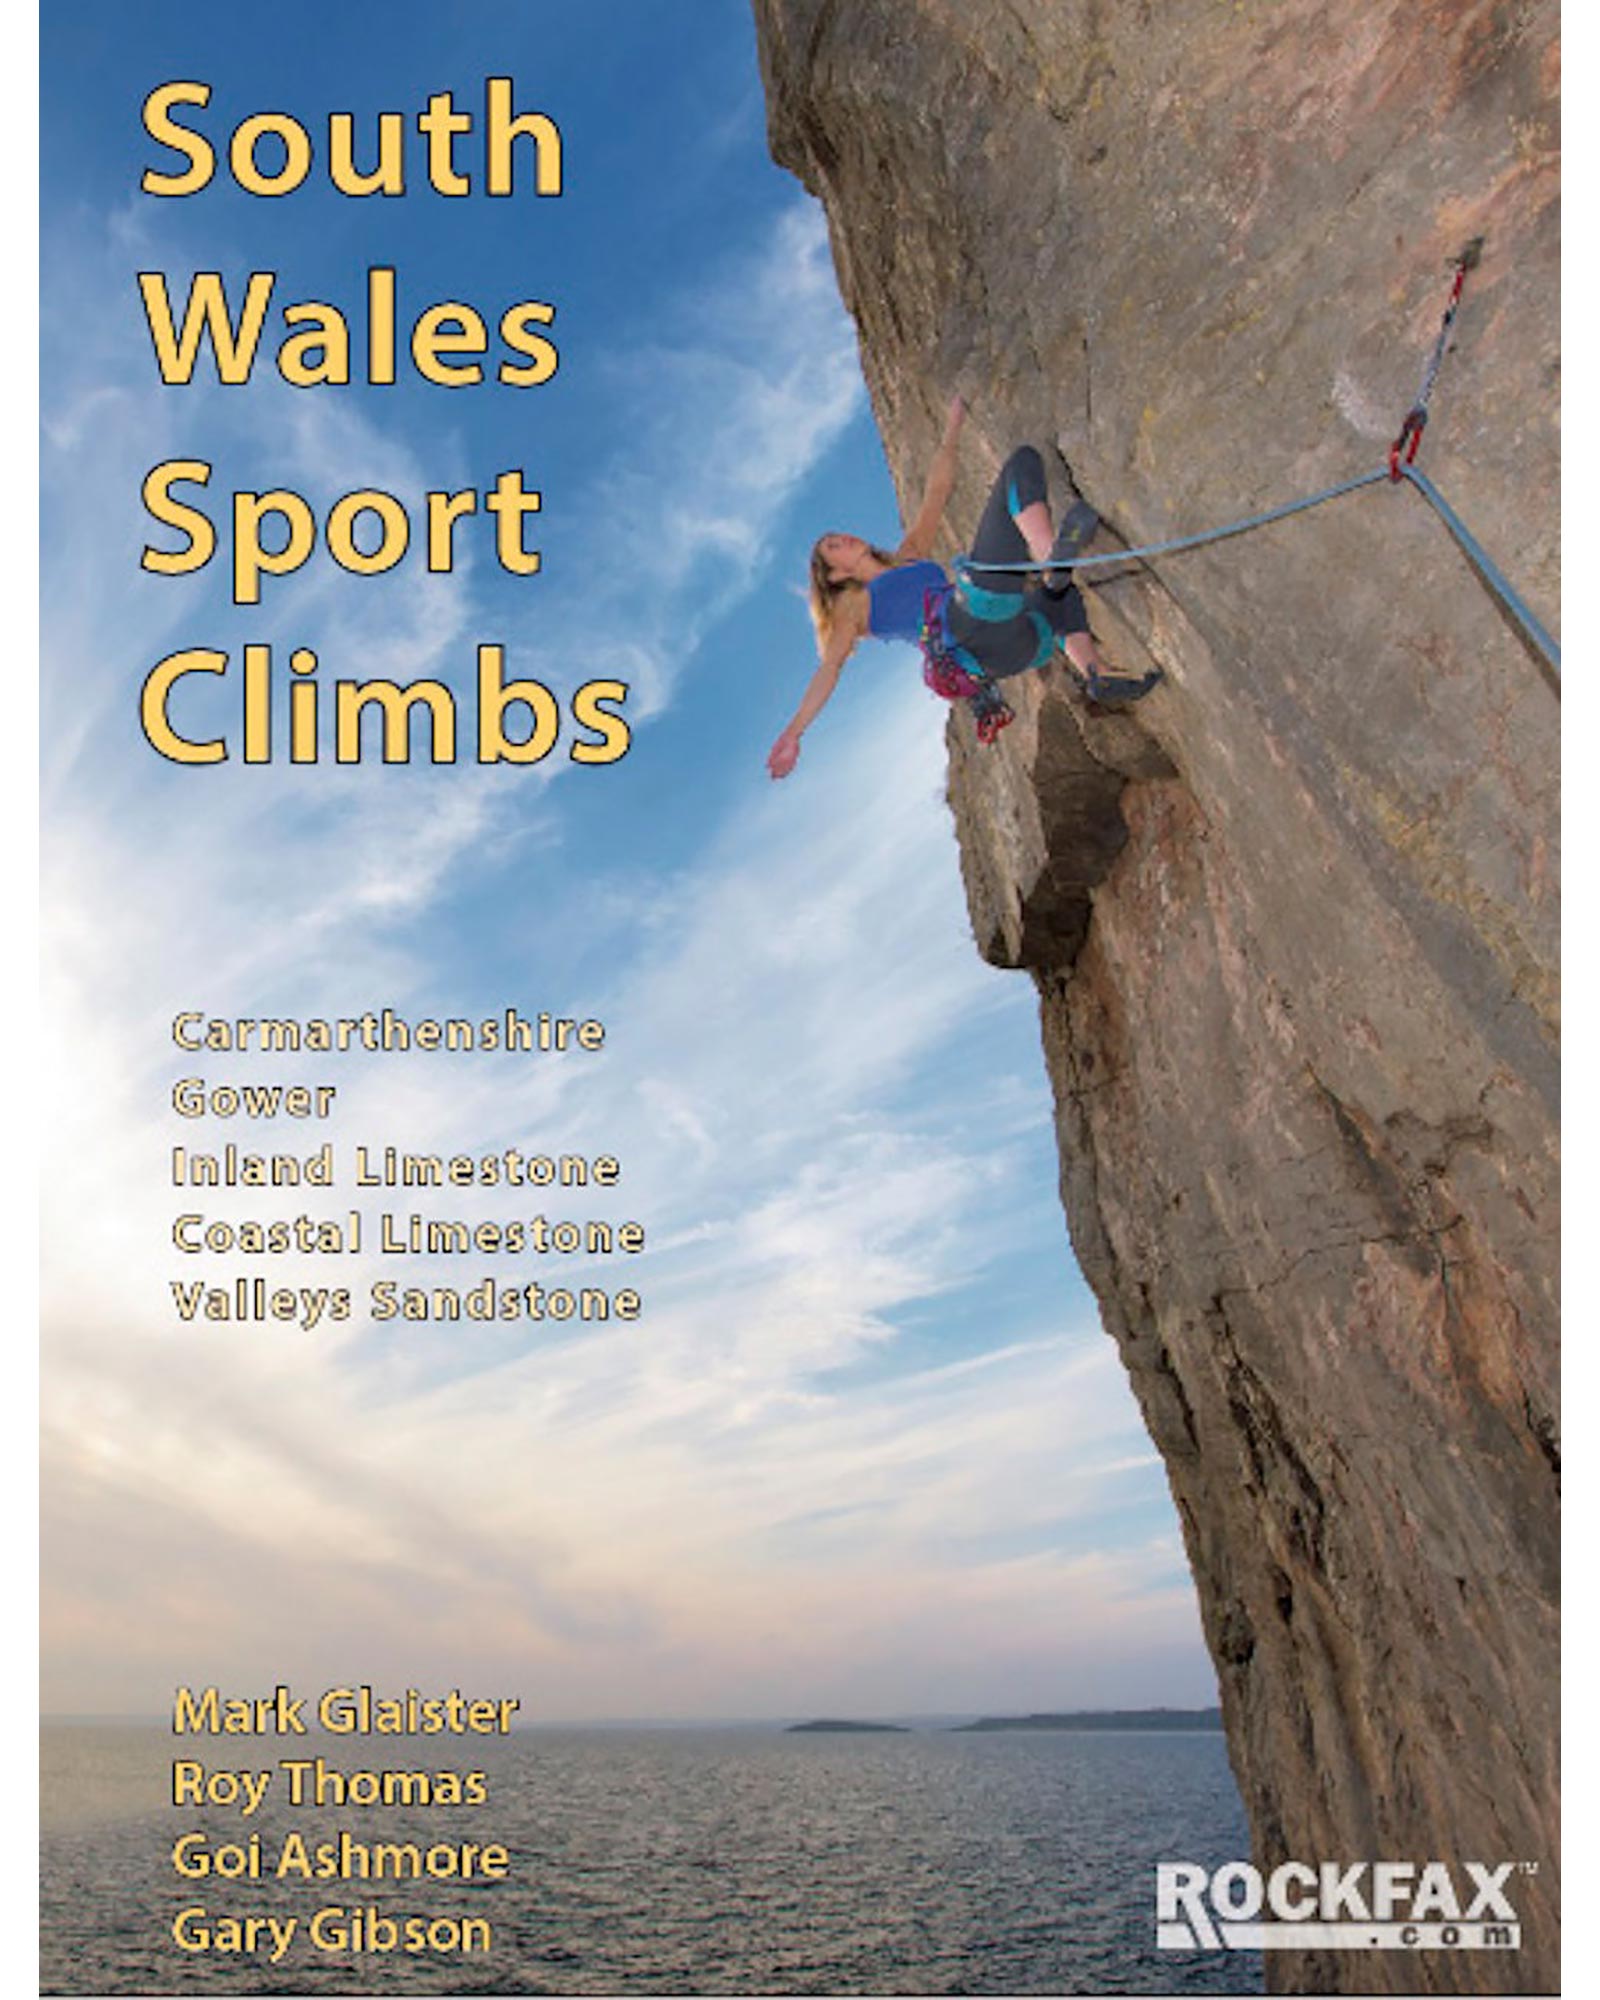 Rockfax South Wales Sport Climbs Guide Book